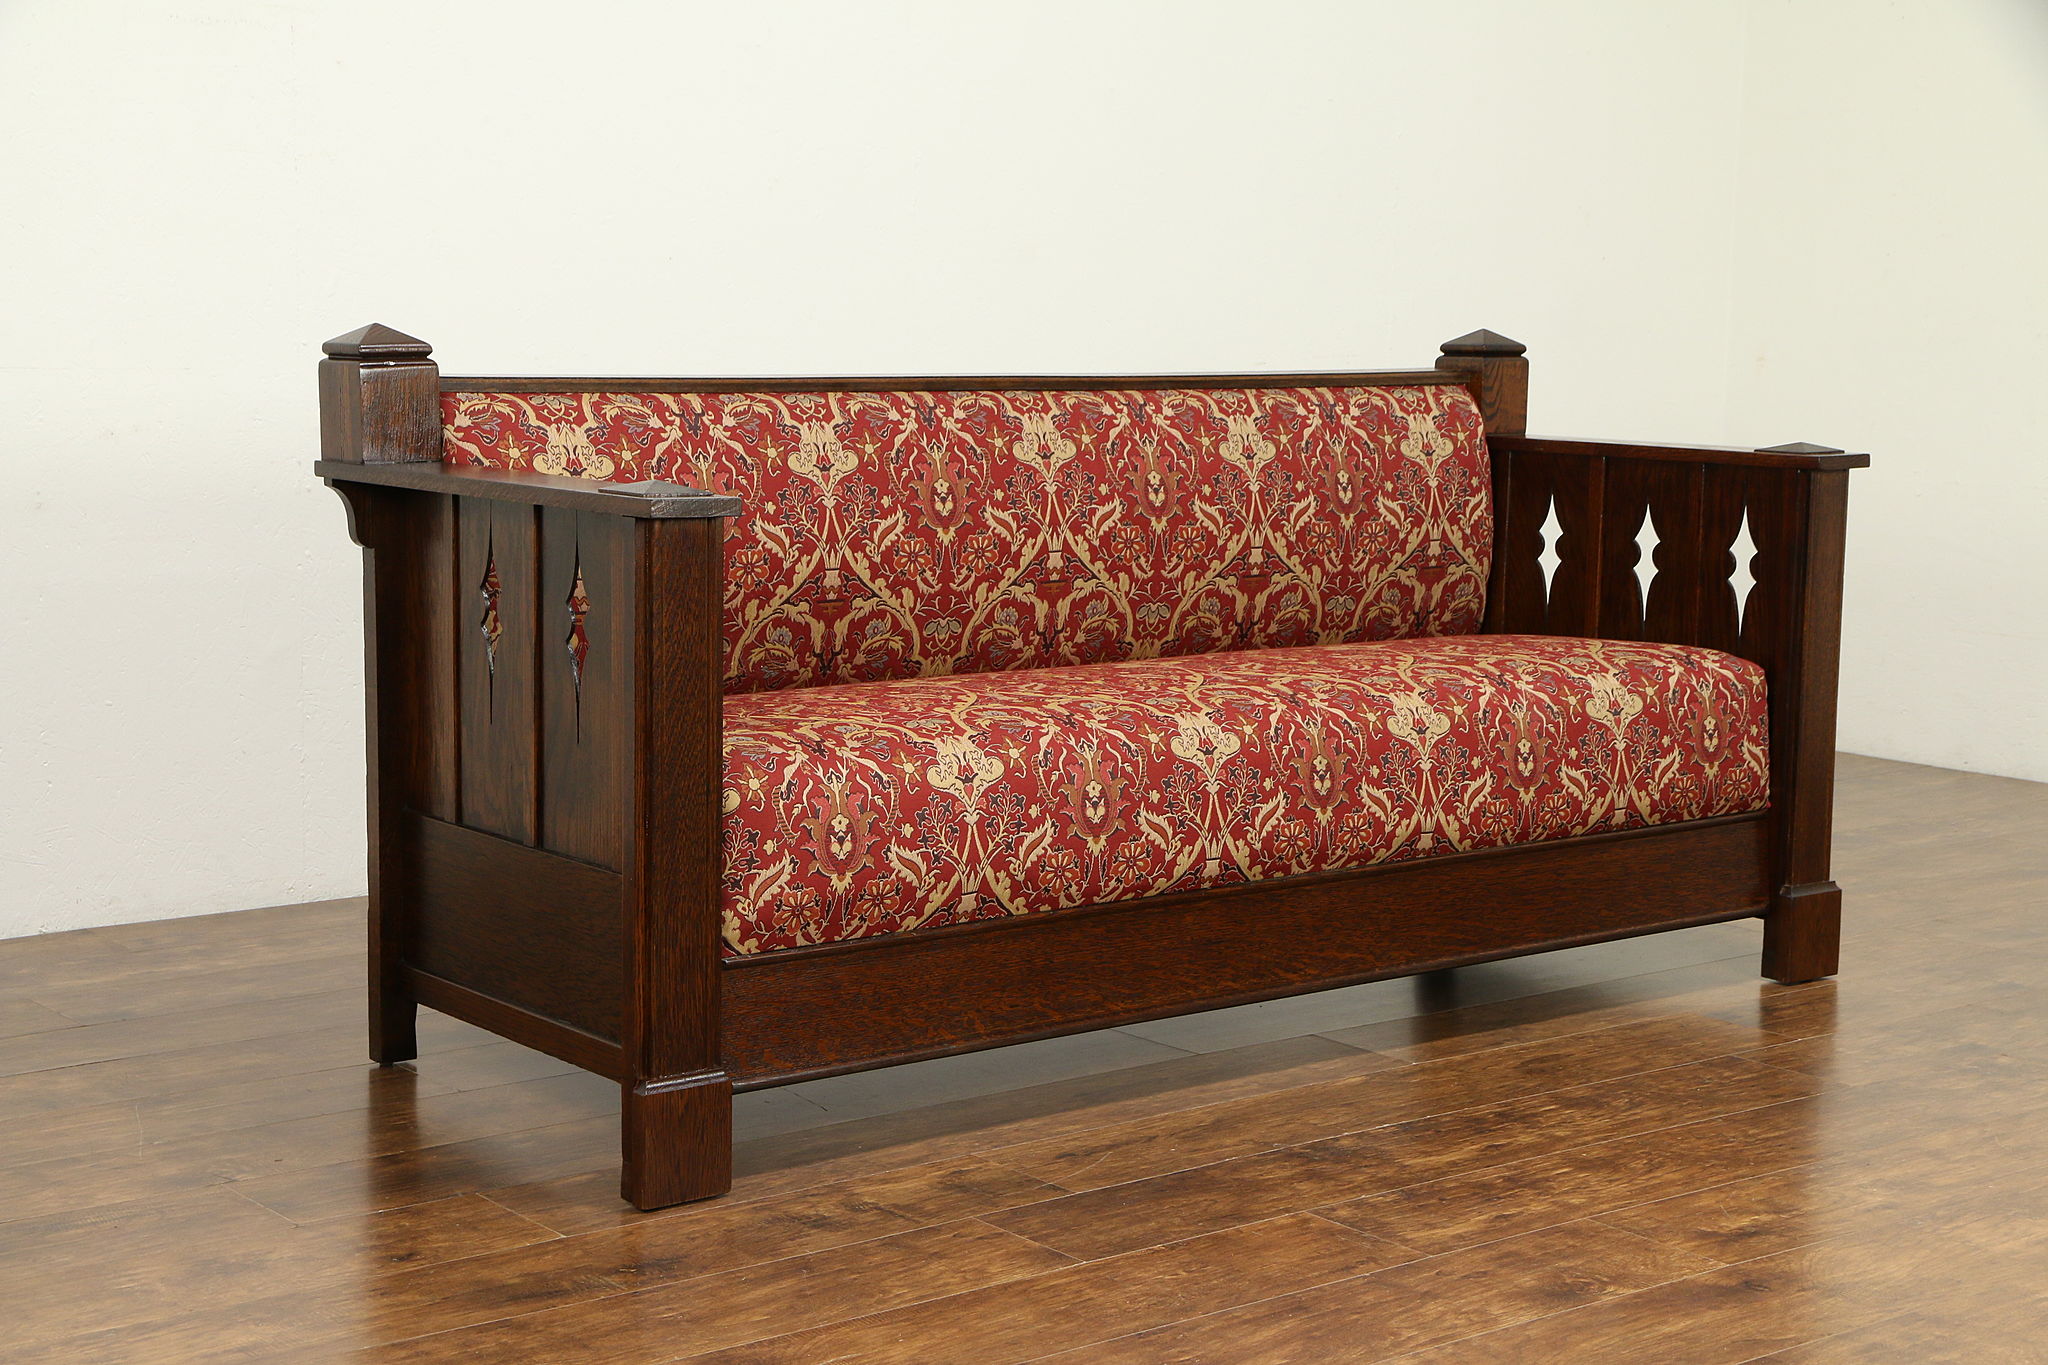 craftsman-style futon sofa bed plans